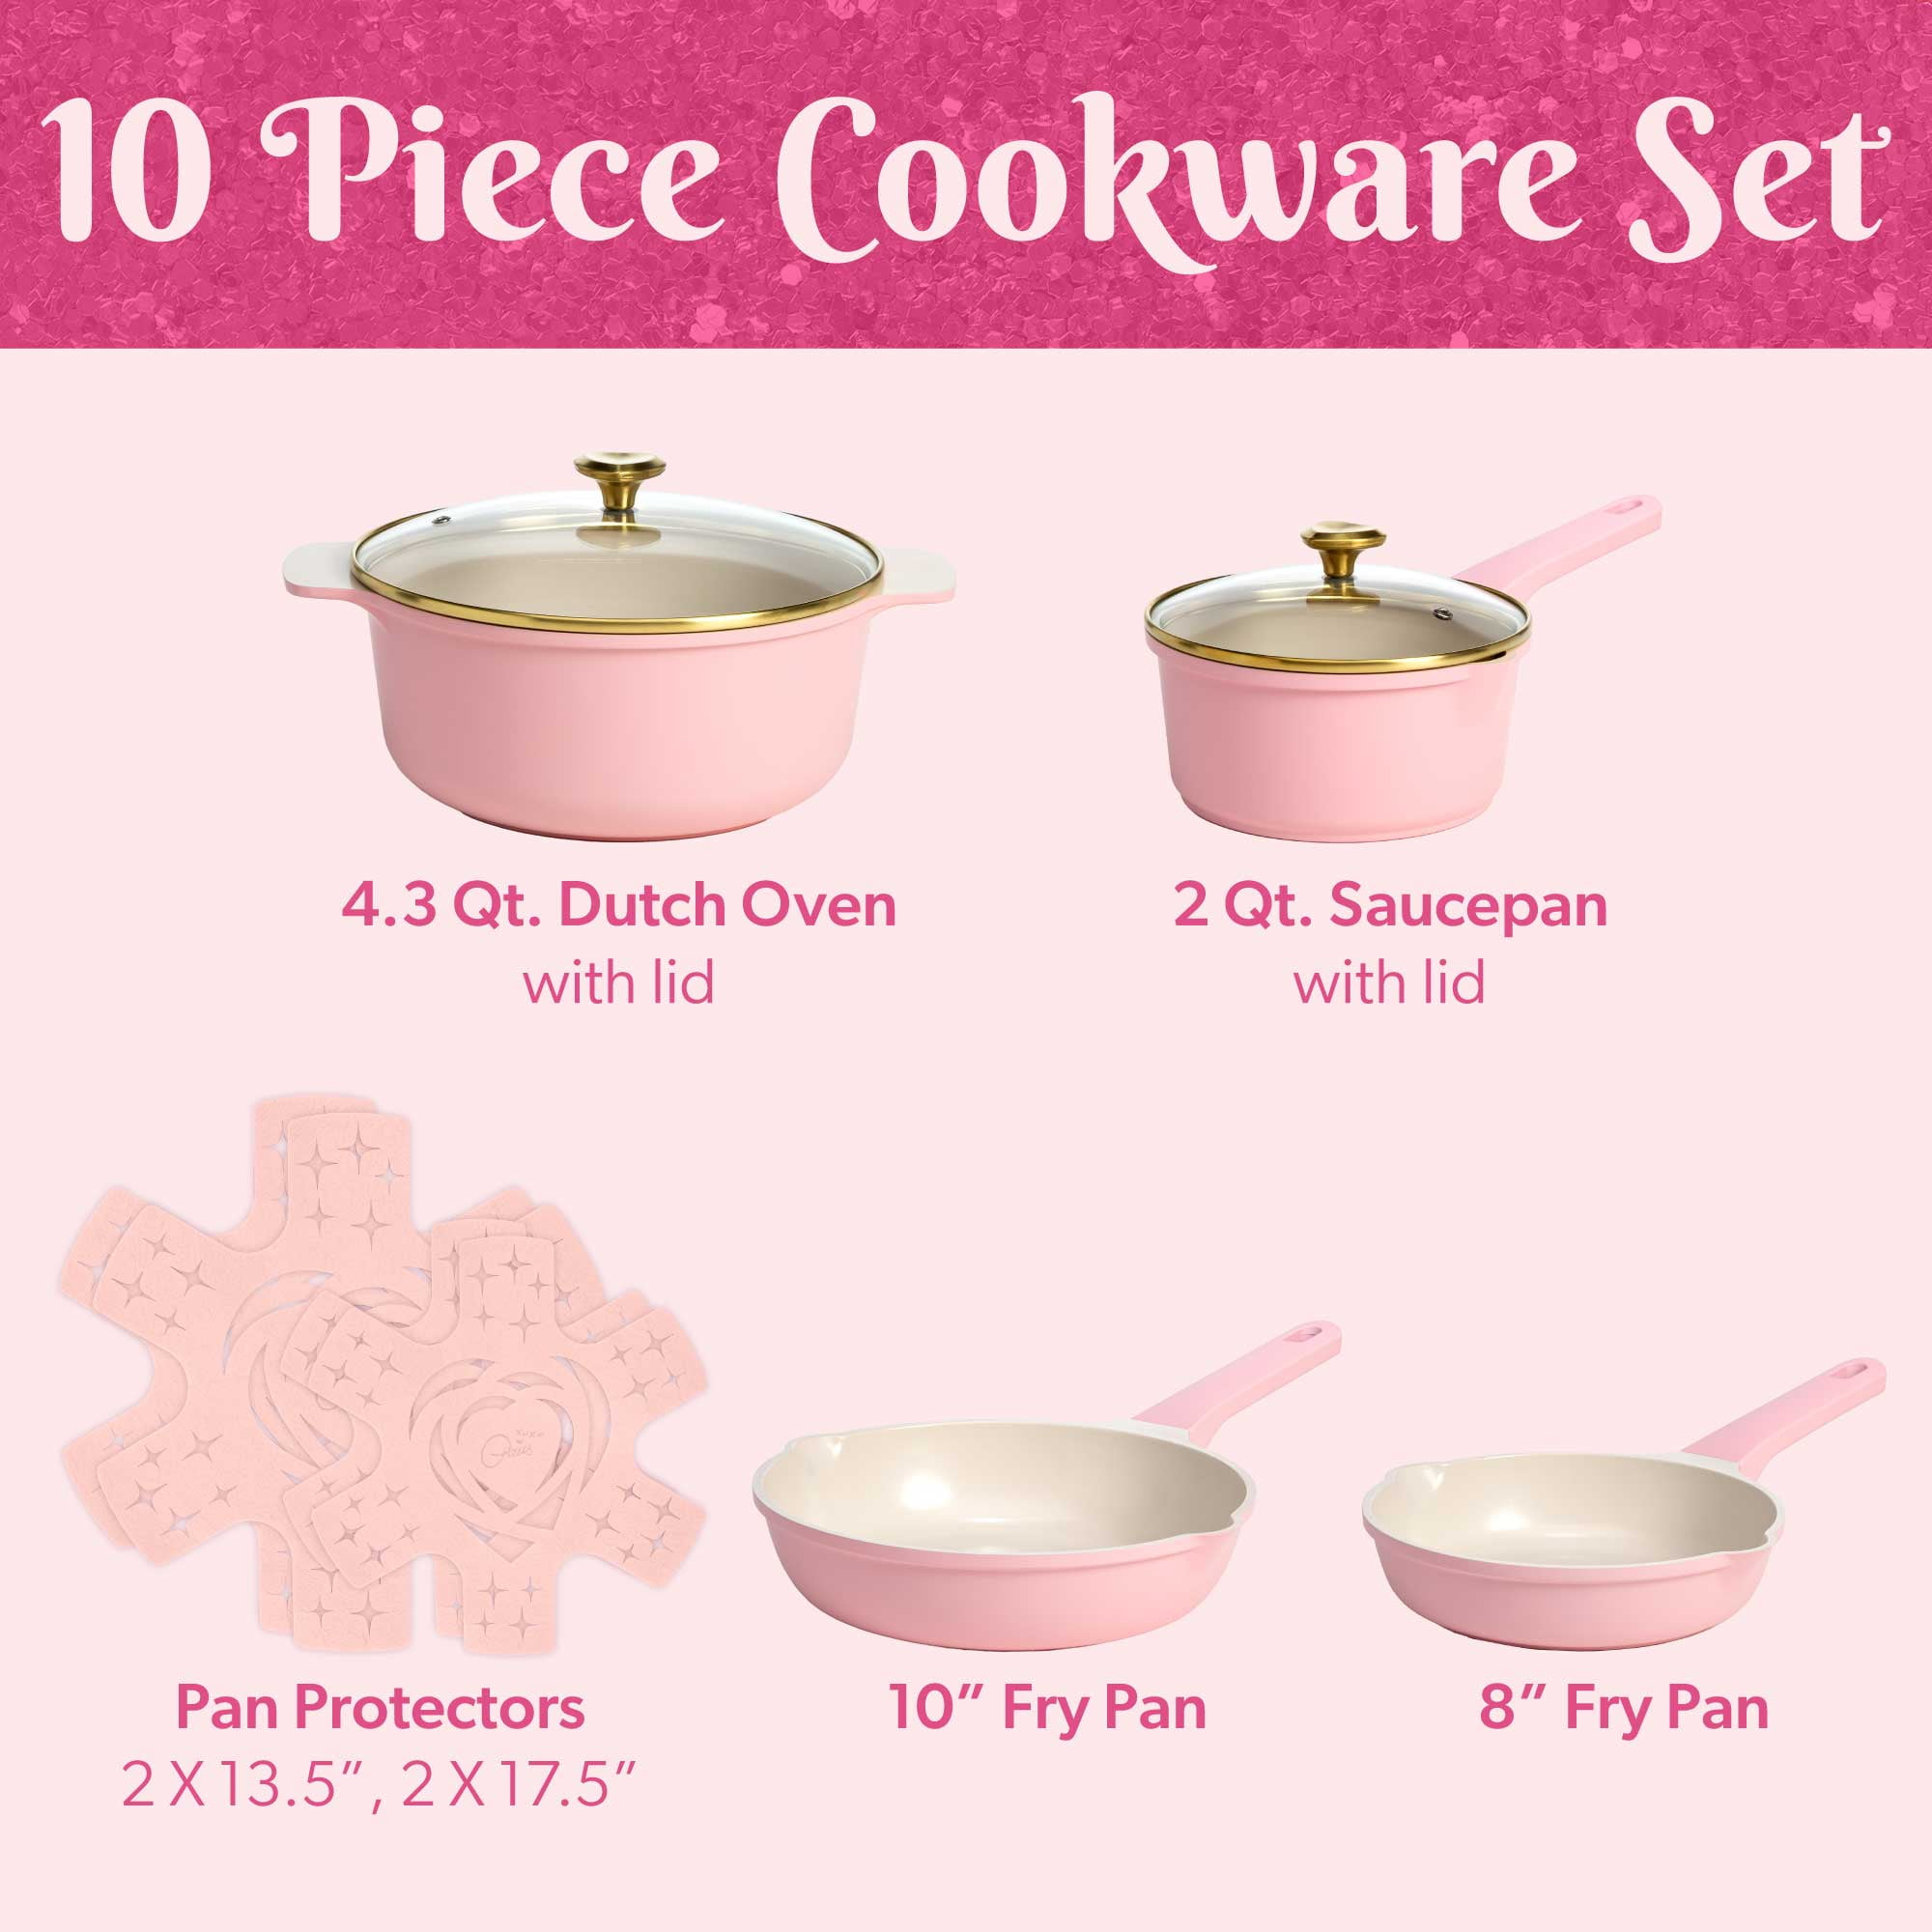 Paris Hilton PH11579-AS Clean Ceramic Nonstick Cast Aluminum Cookware Set with Heart Shaped Lid Knobs, Pink